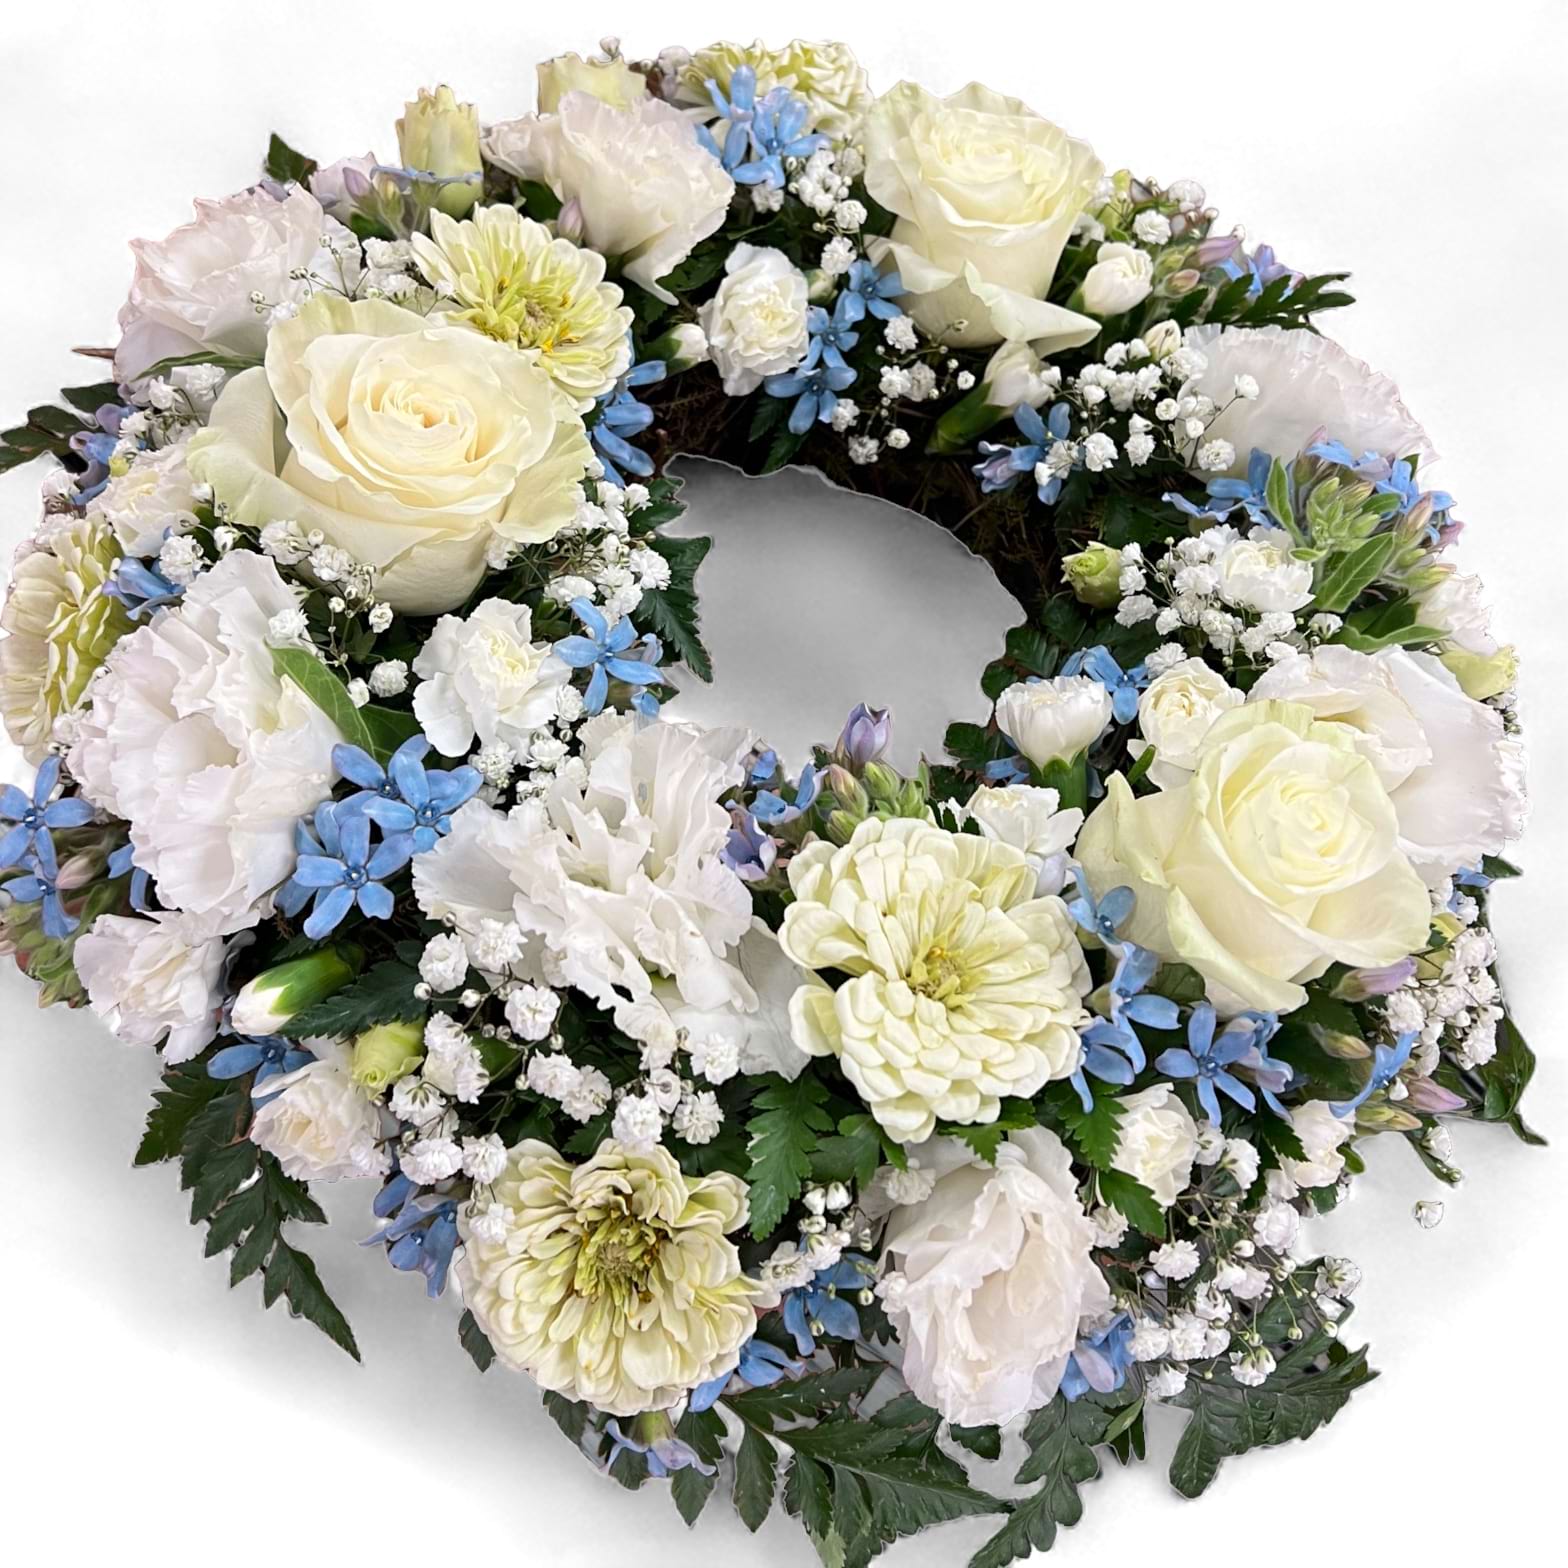 Funeral Wreath Brisbane